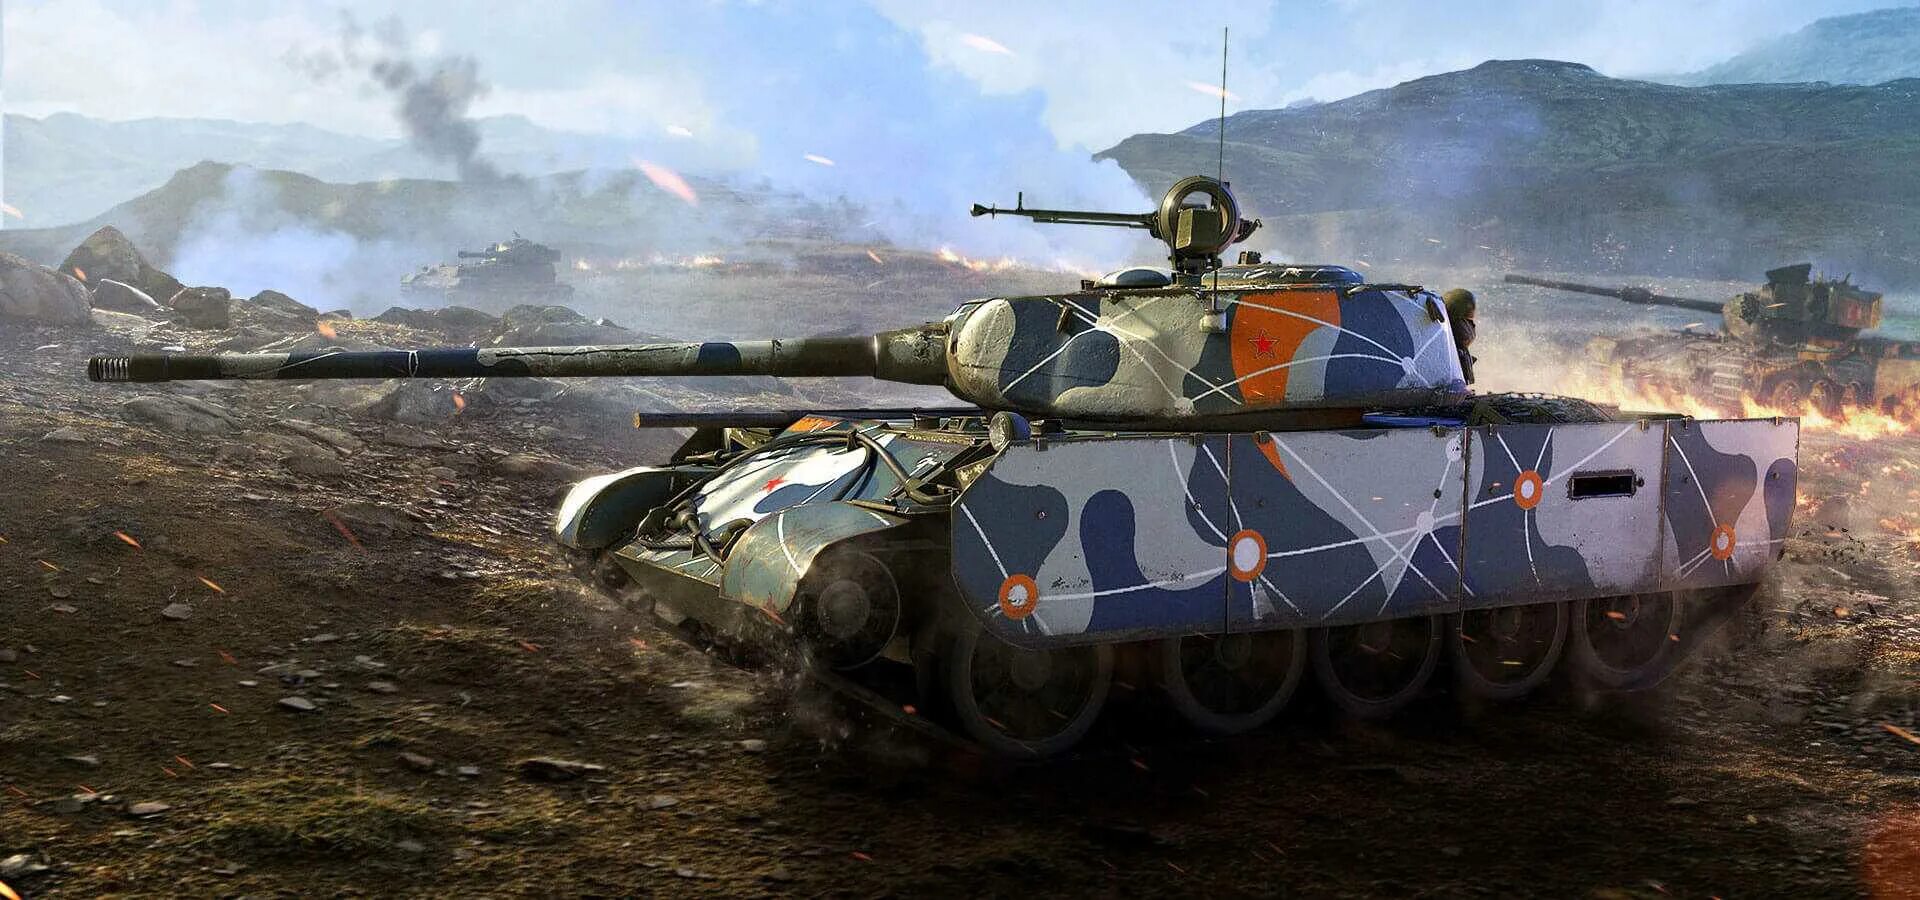 Т 44 100. Т-44-100 World of Tanks. World of Tanks т 44 100 р. Т44 100 танк World of Tanks.